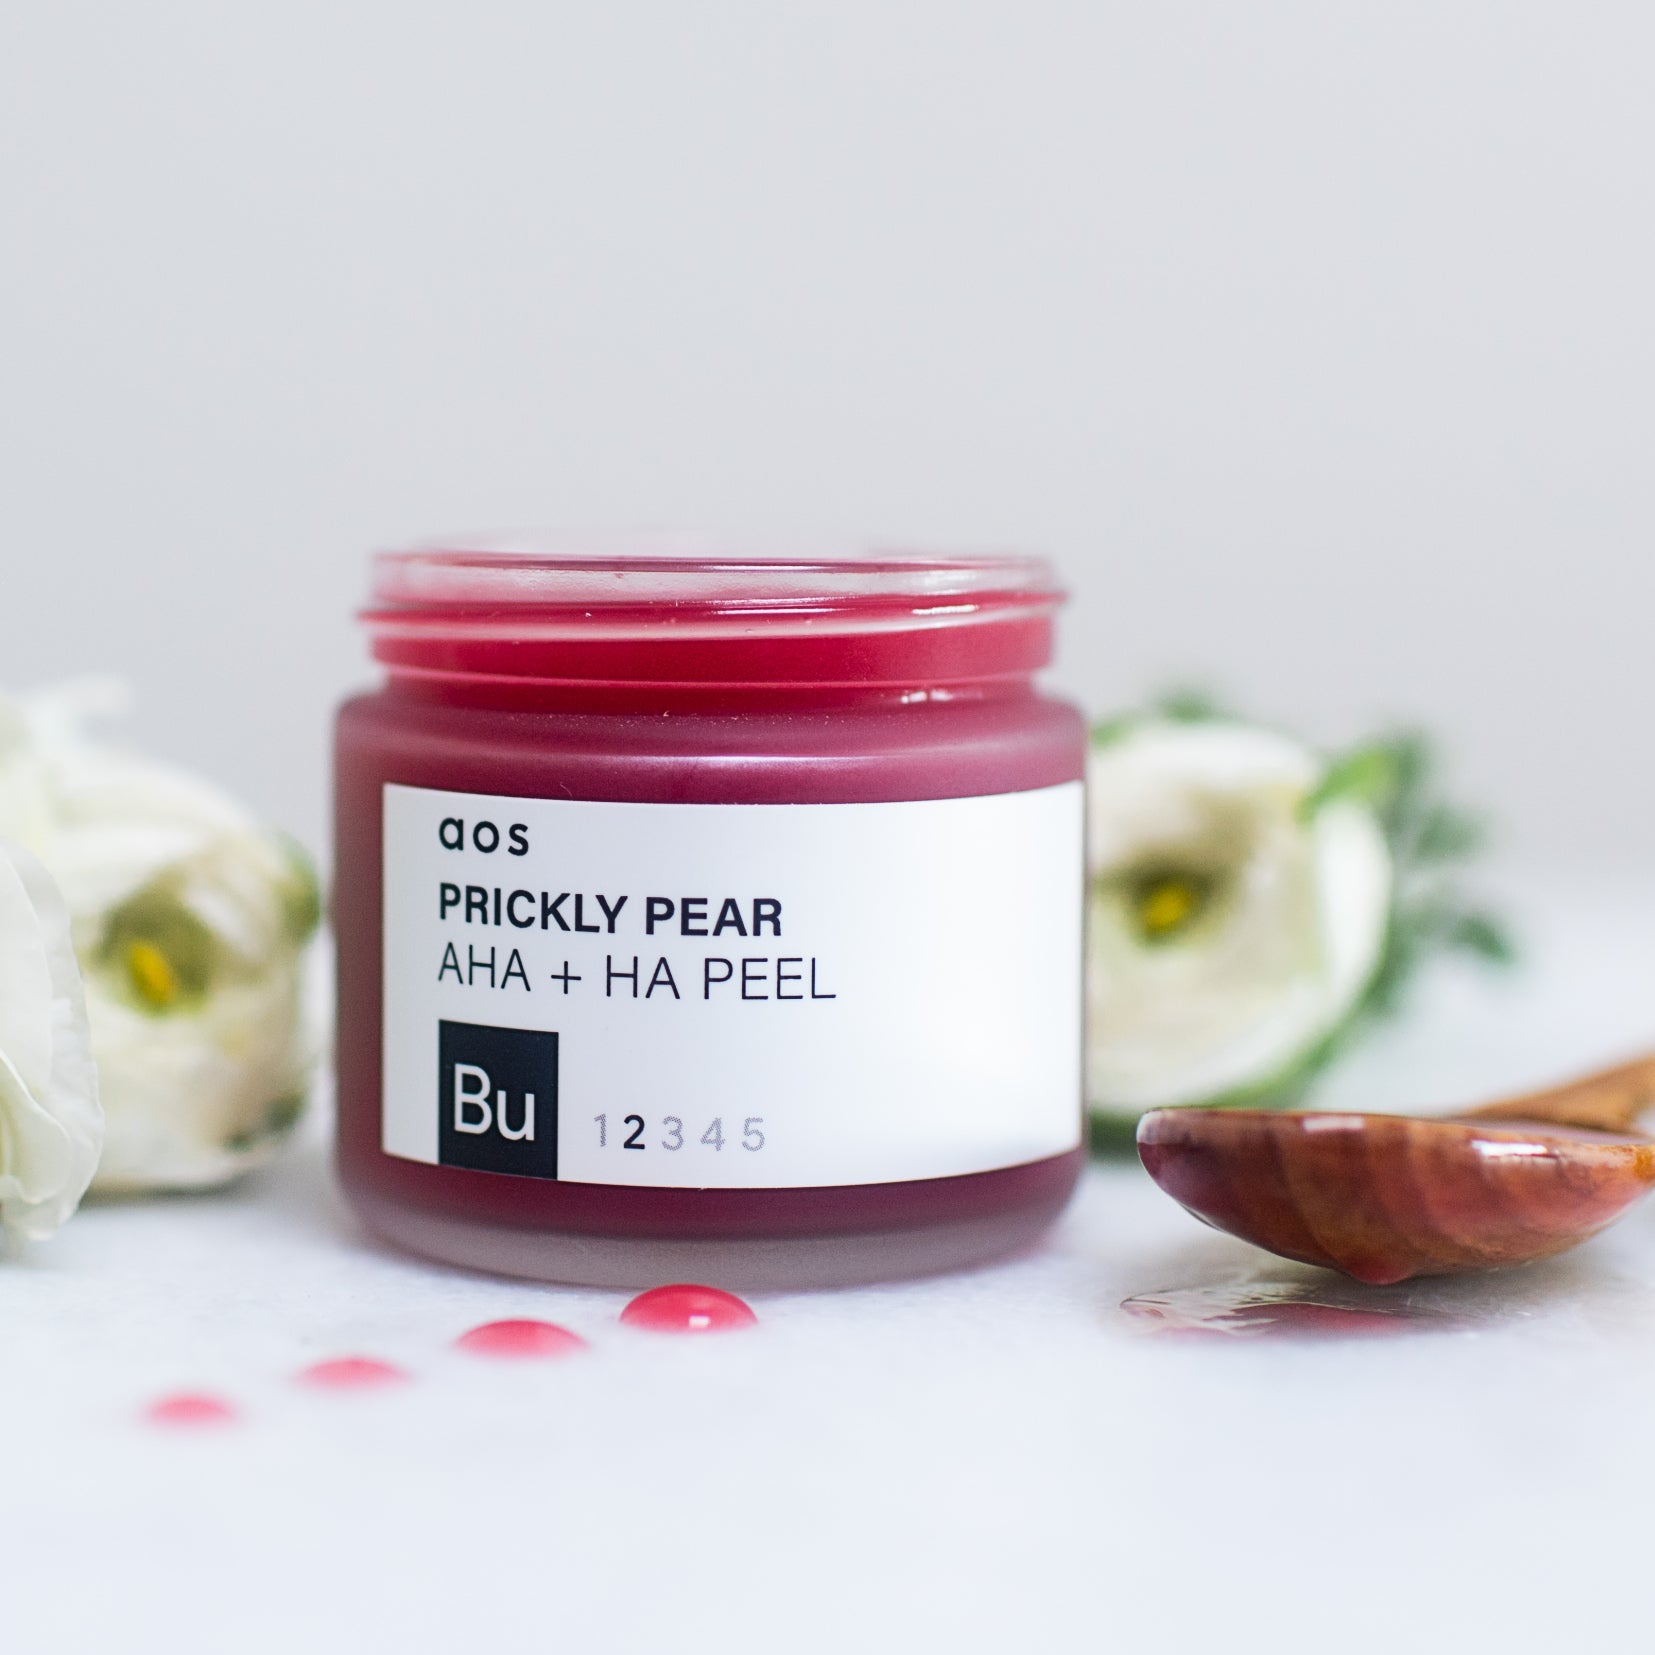 Prickly Pear AHA + HA Peel